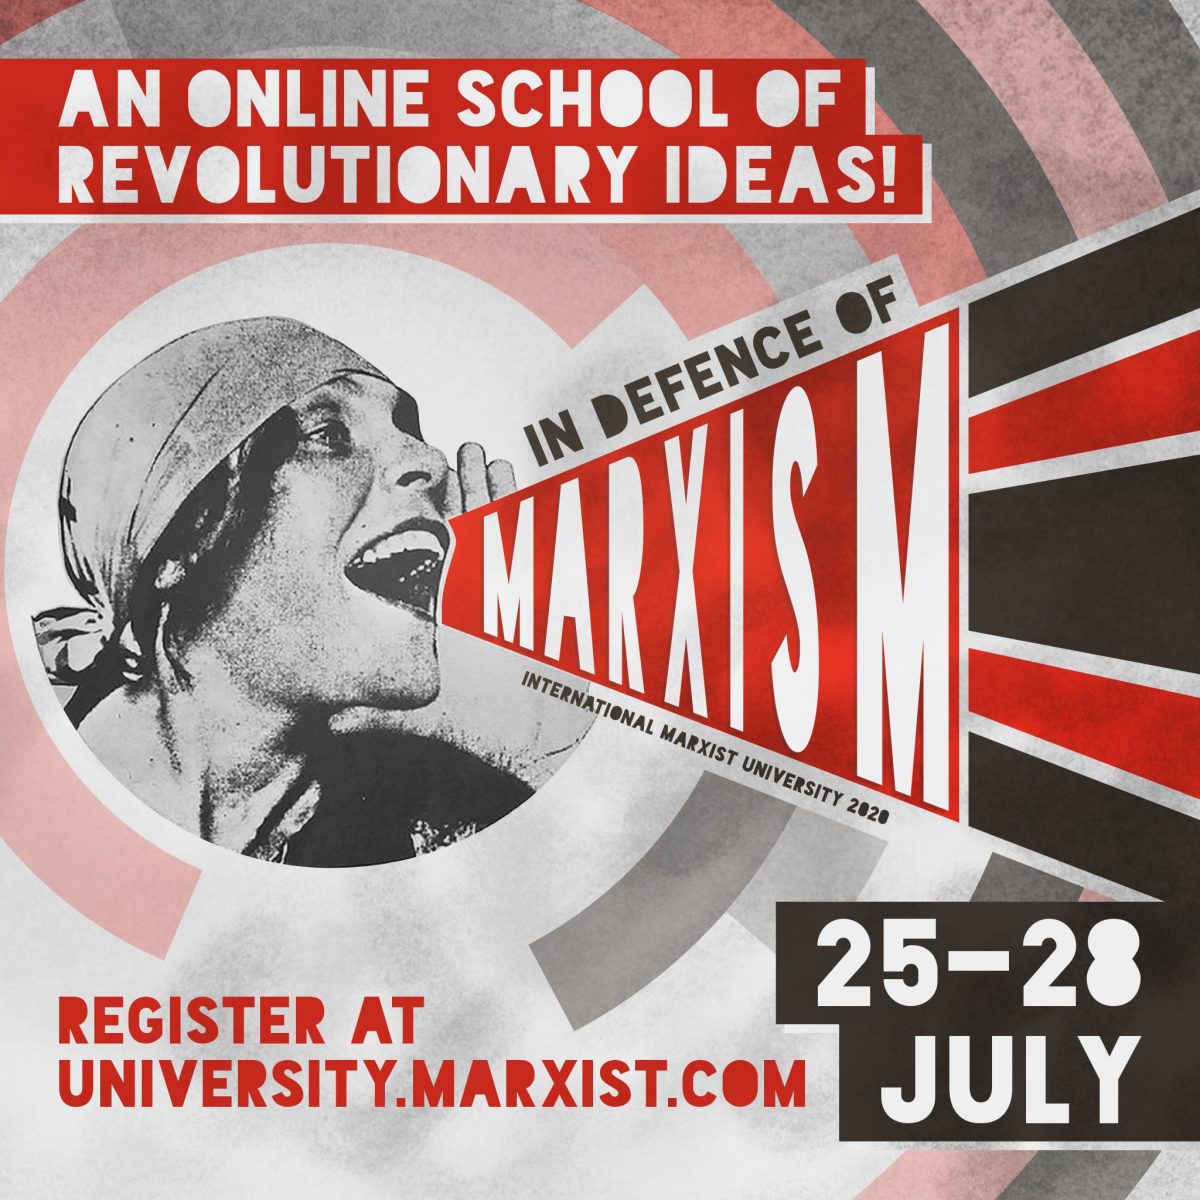 International Marxist University 2020